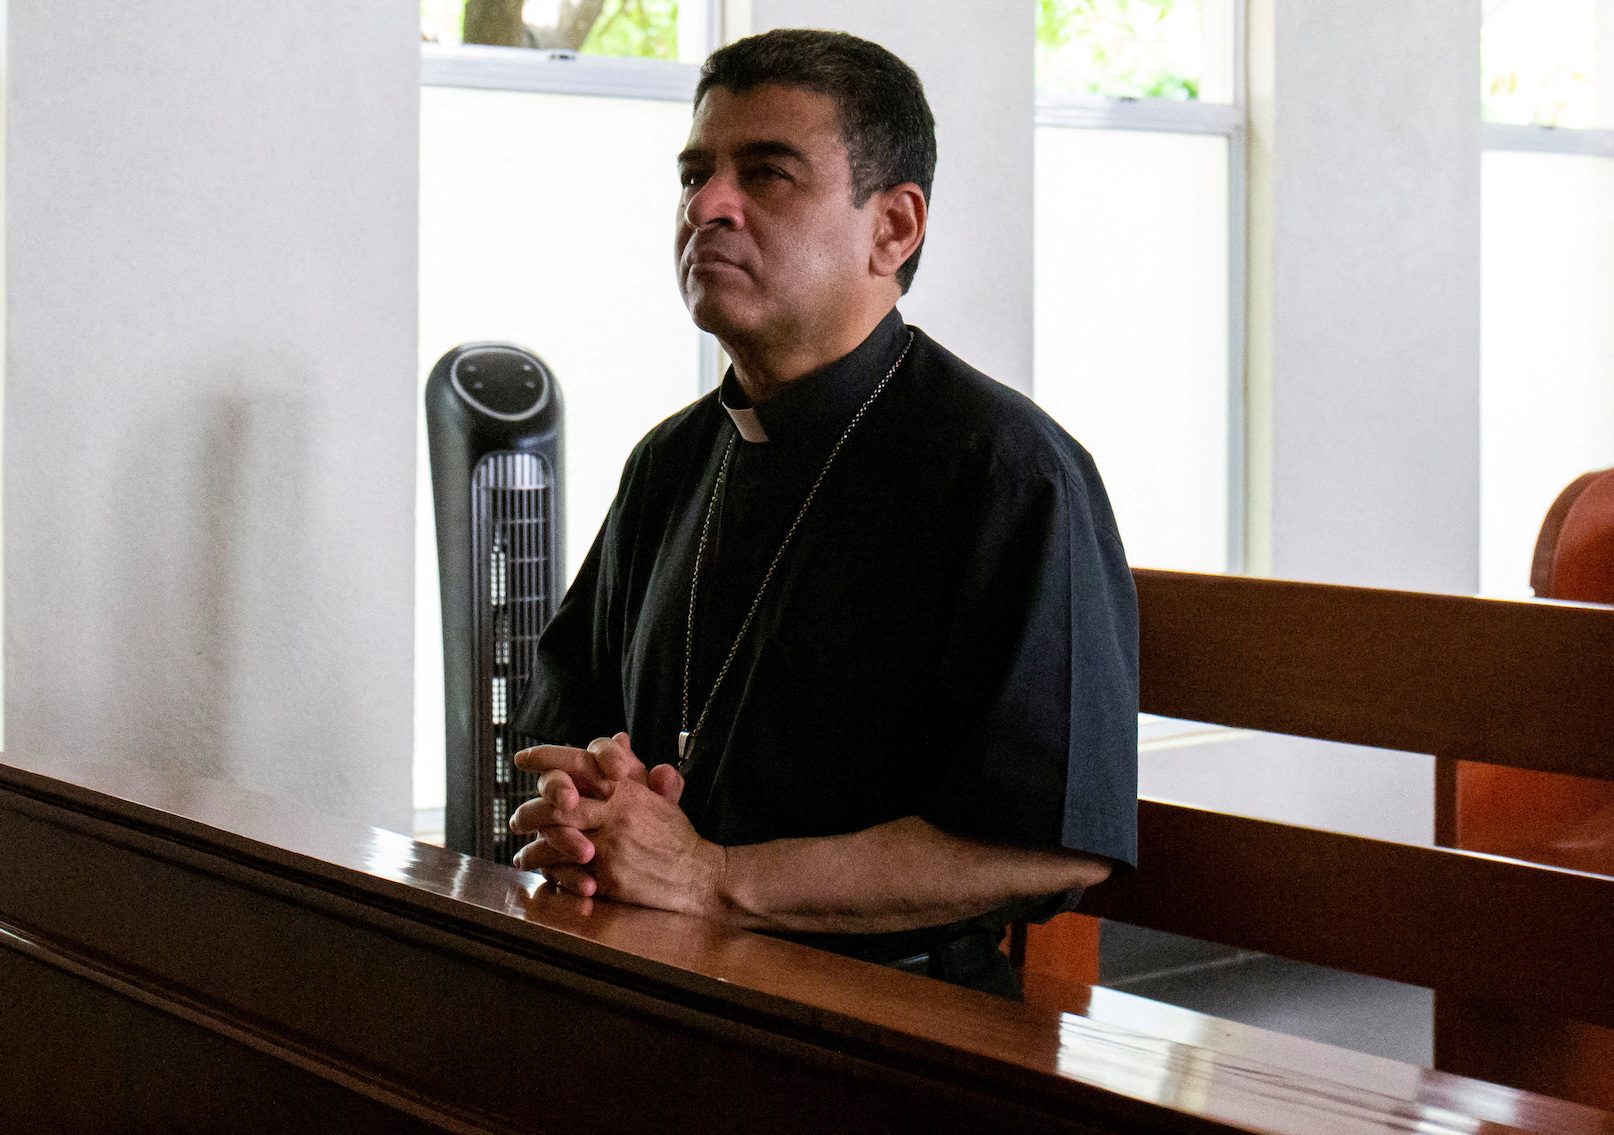 Nicaragua expels Bishop Rolando Alvarez, priests amid crackdown